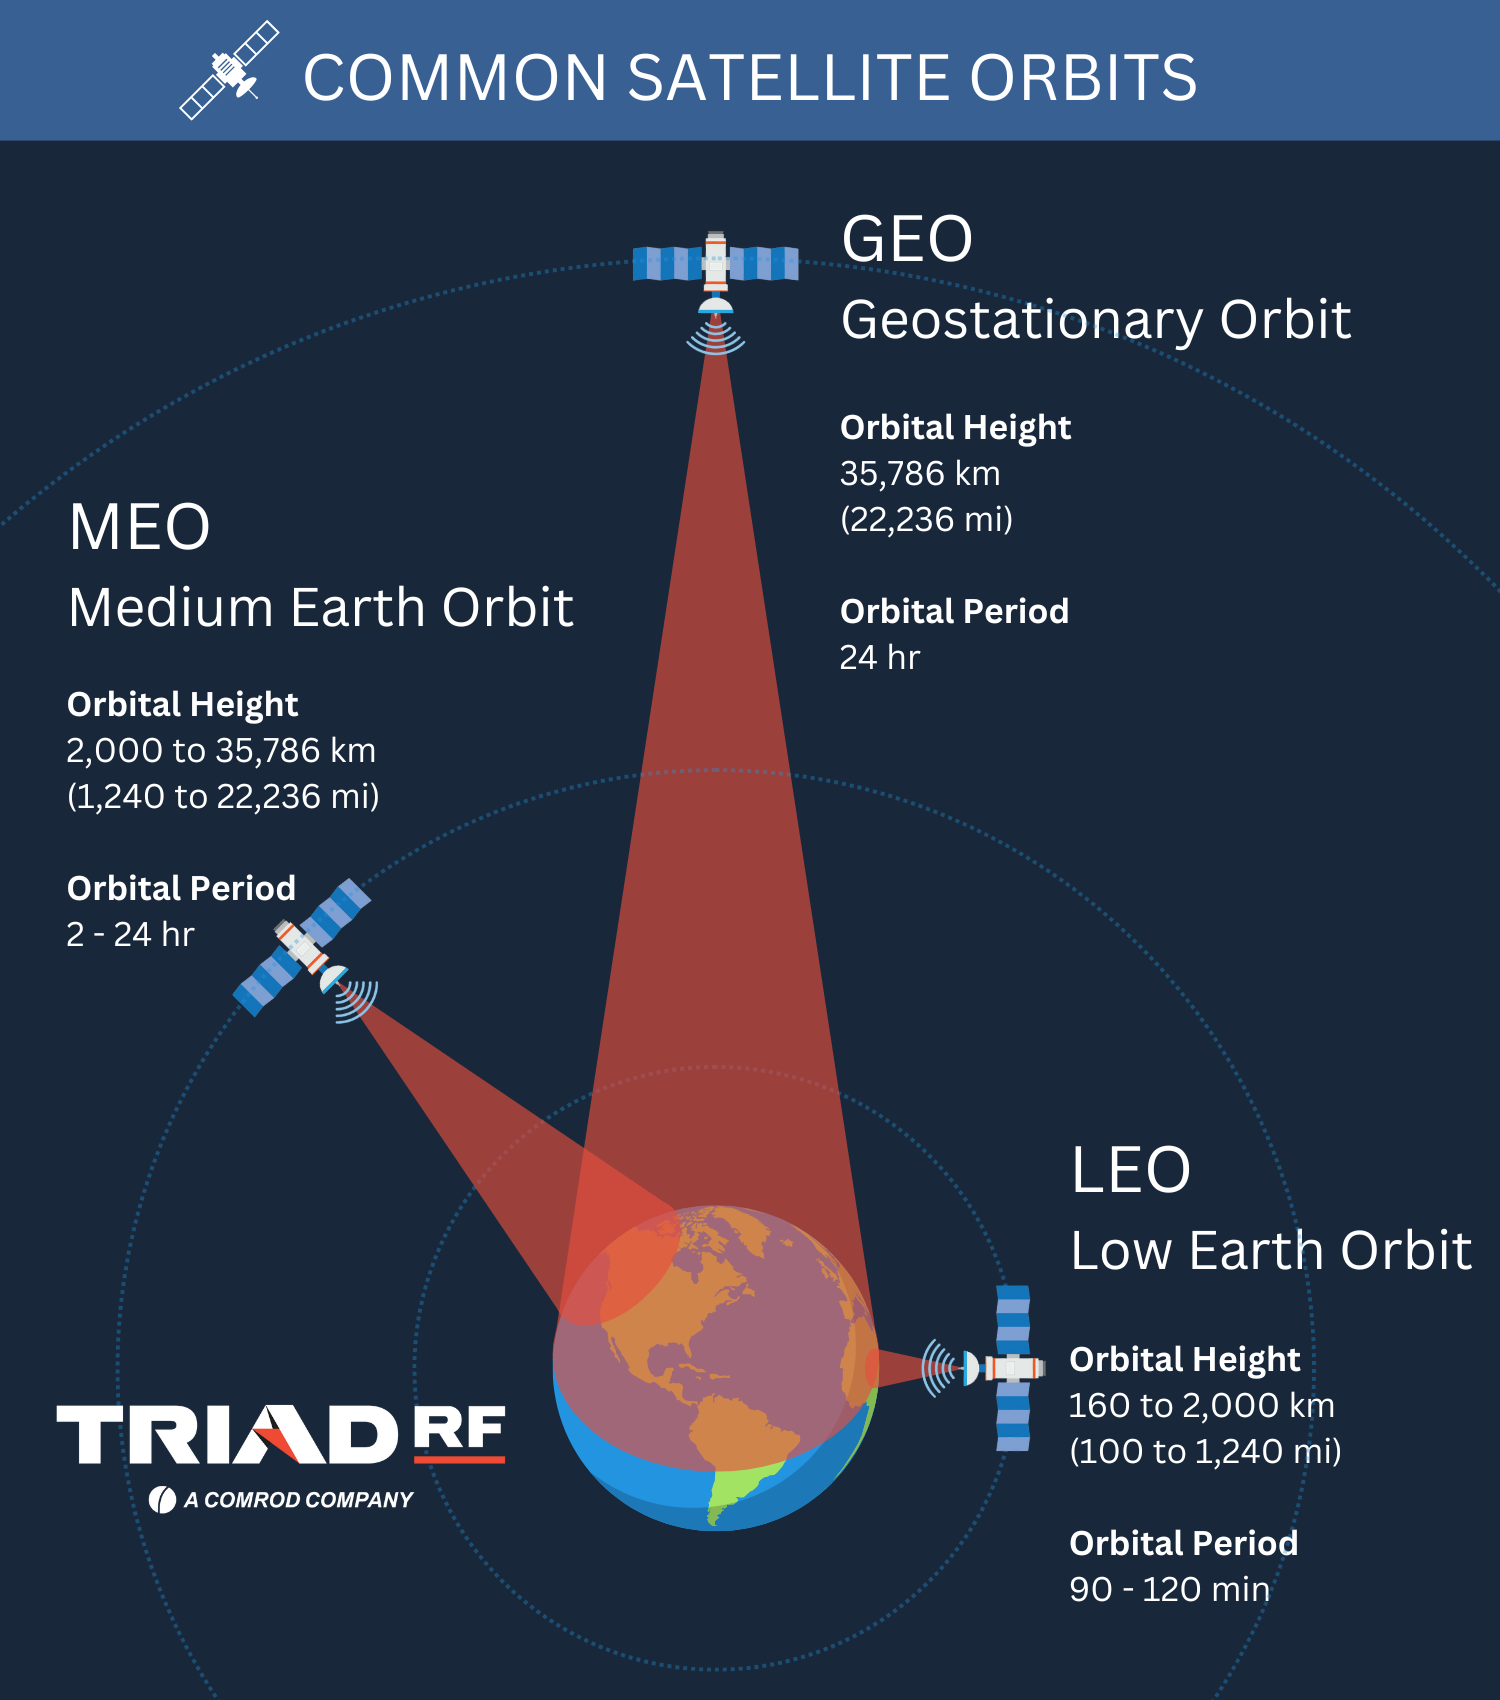 Characteristics of the three major satellite orbits